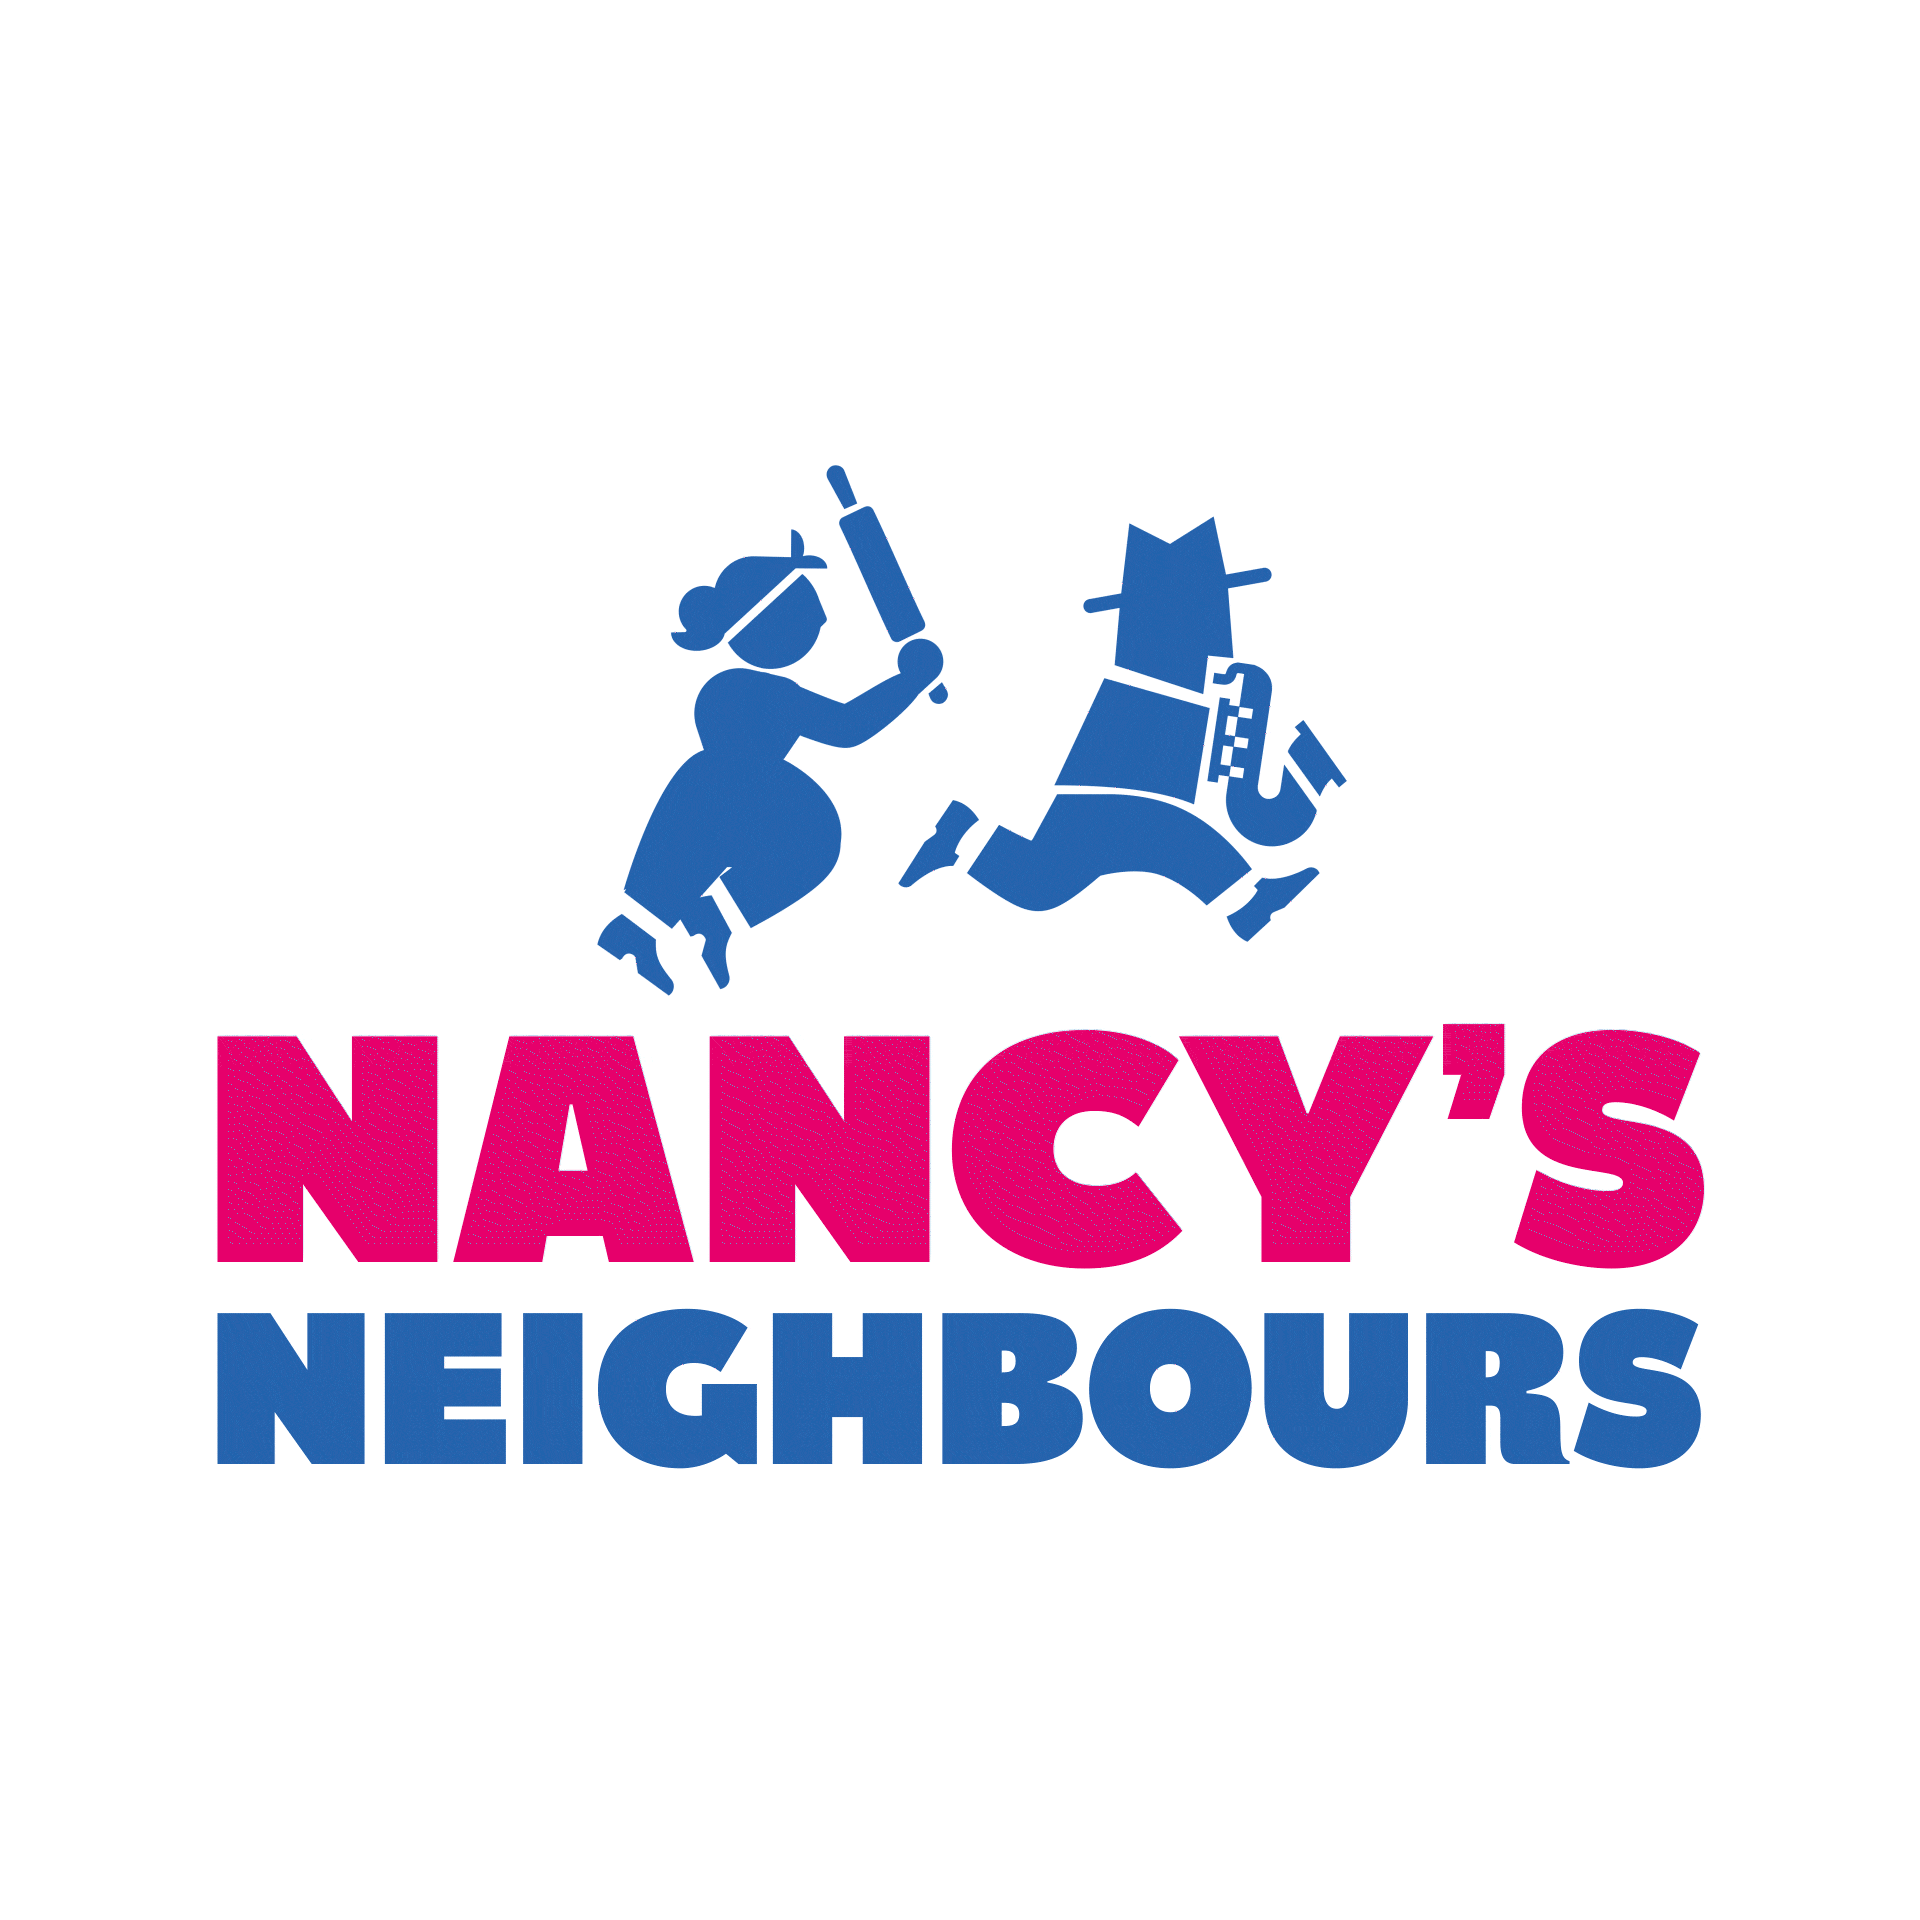 Nancy's Neighbours logo animation